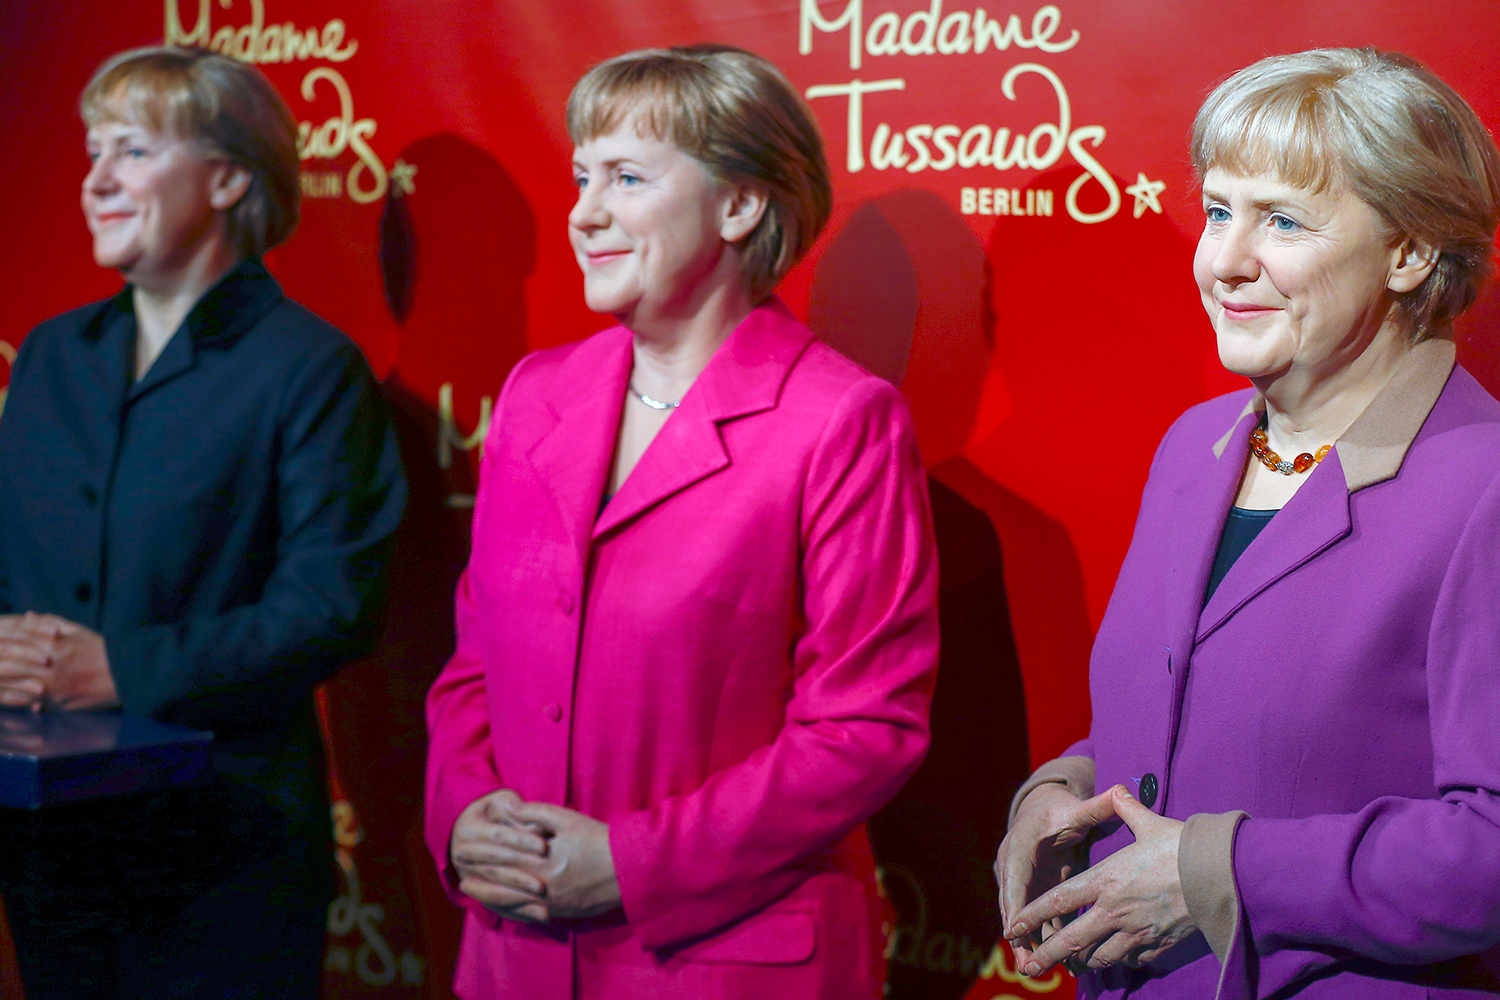 Three wax figures of Angela Merkel show her 10 years in office